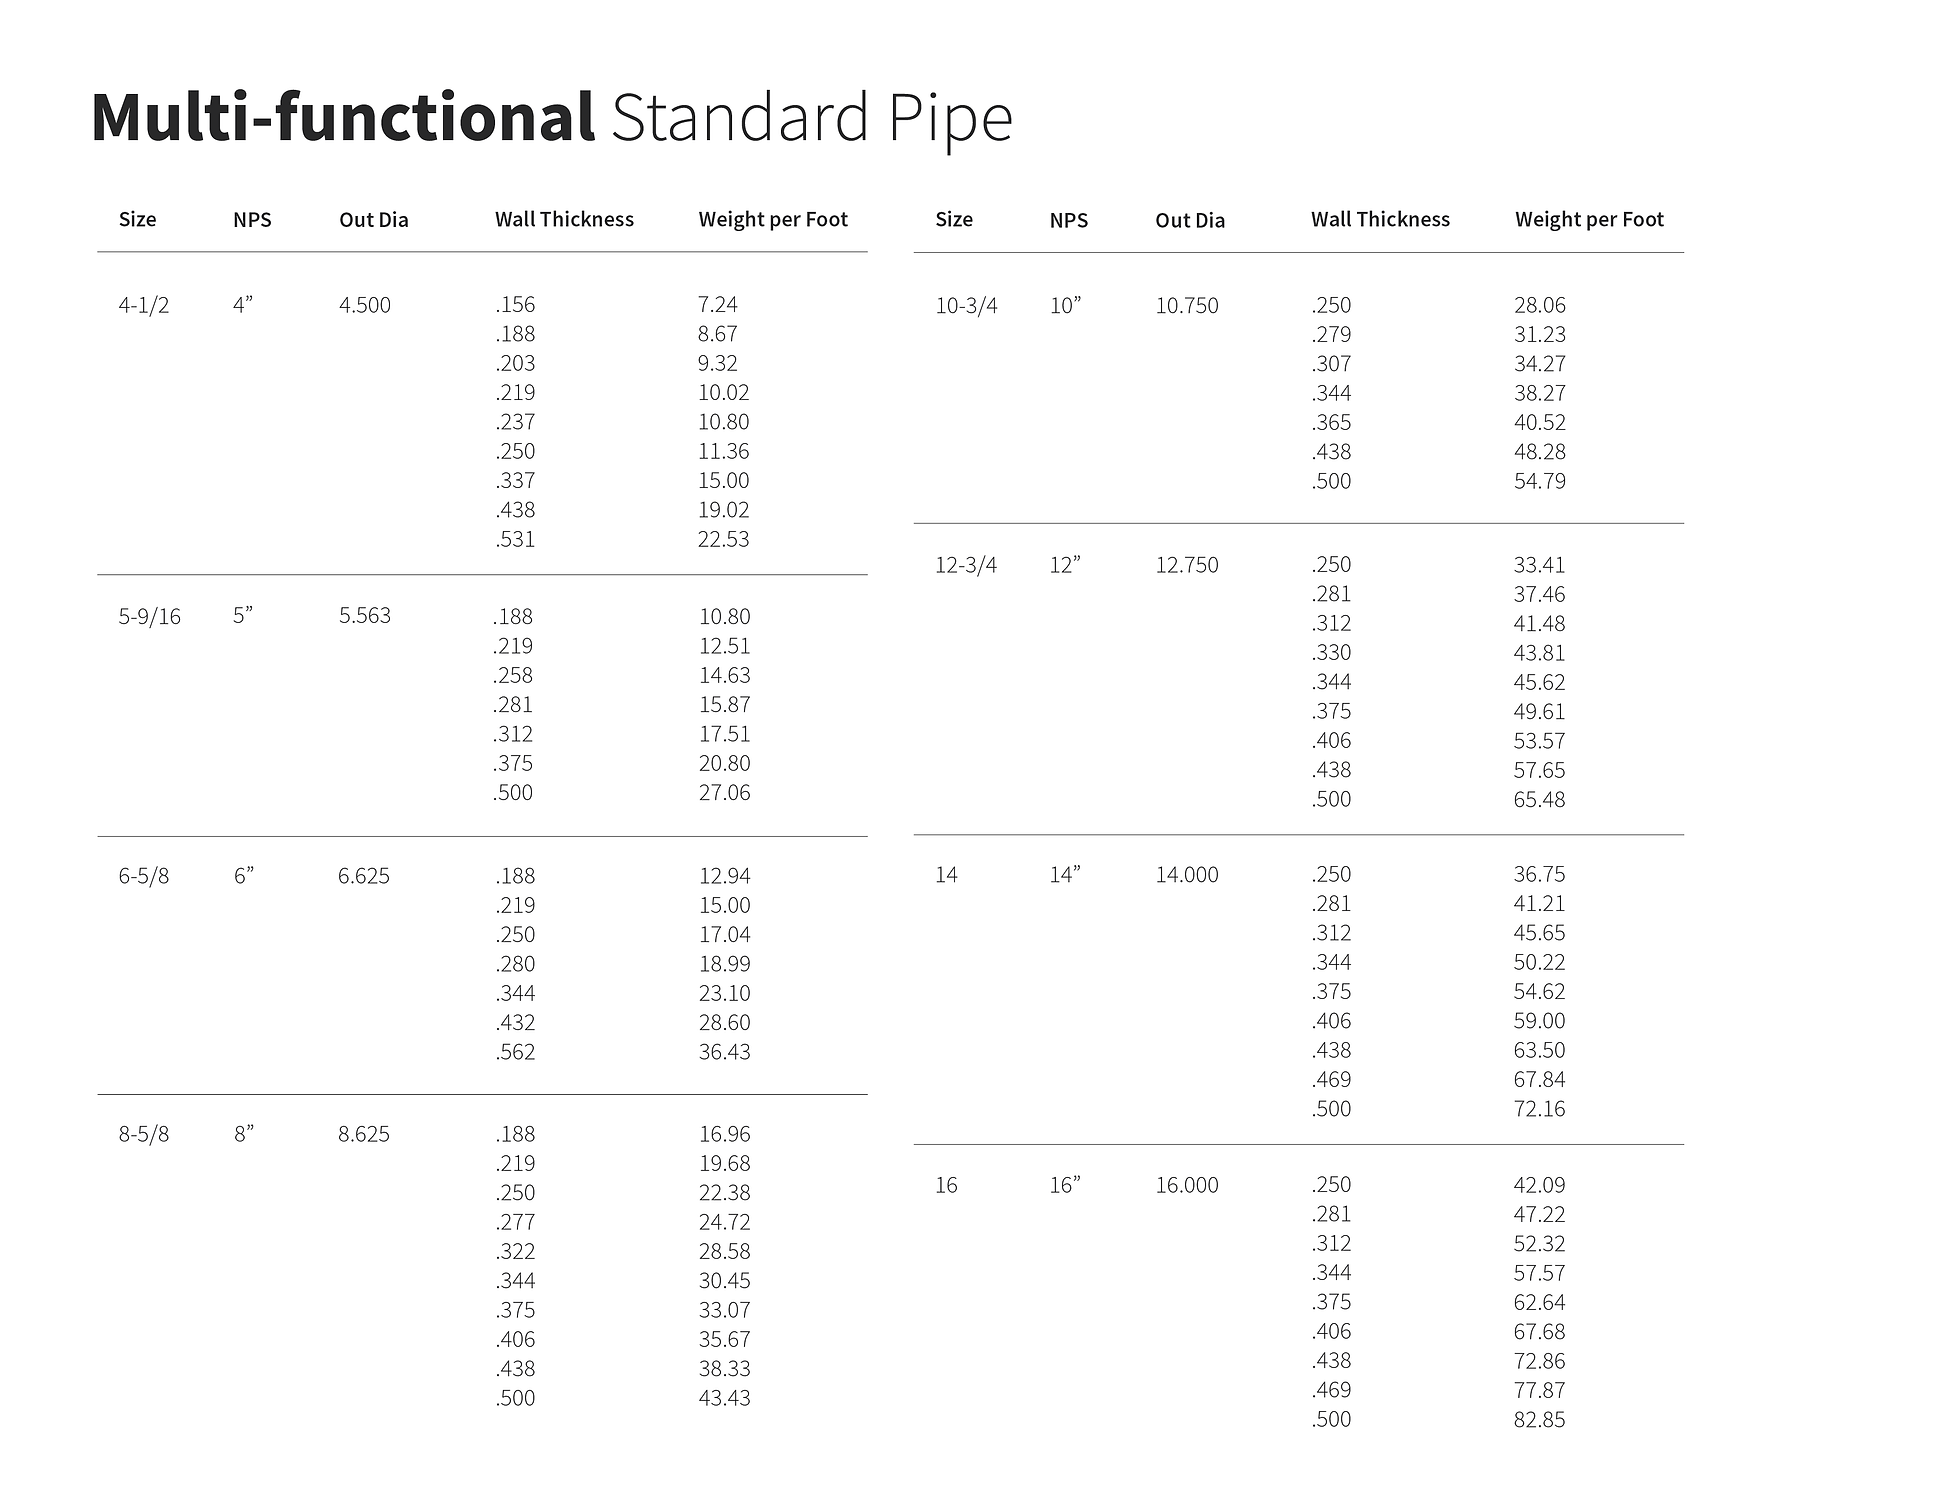 Standard Pipe S&R 2